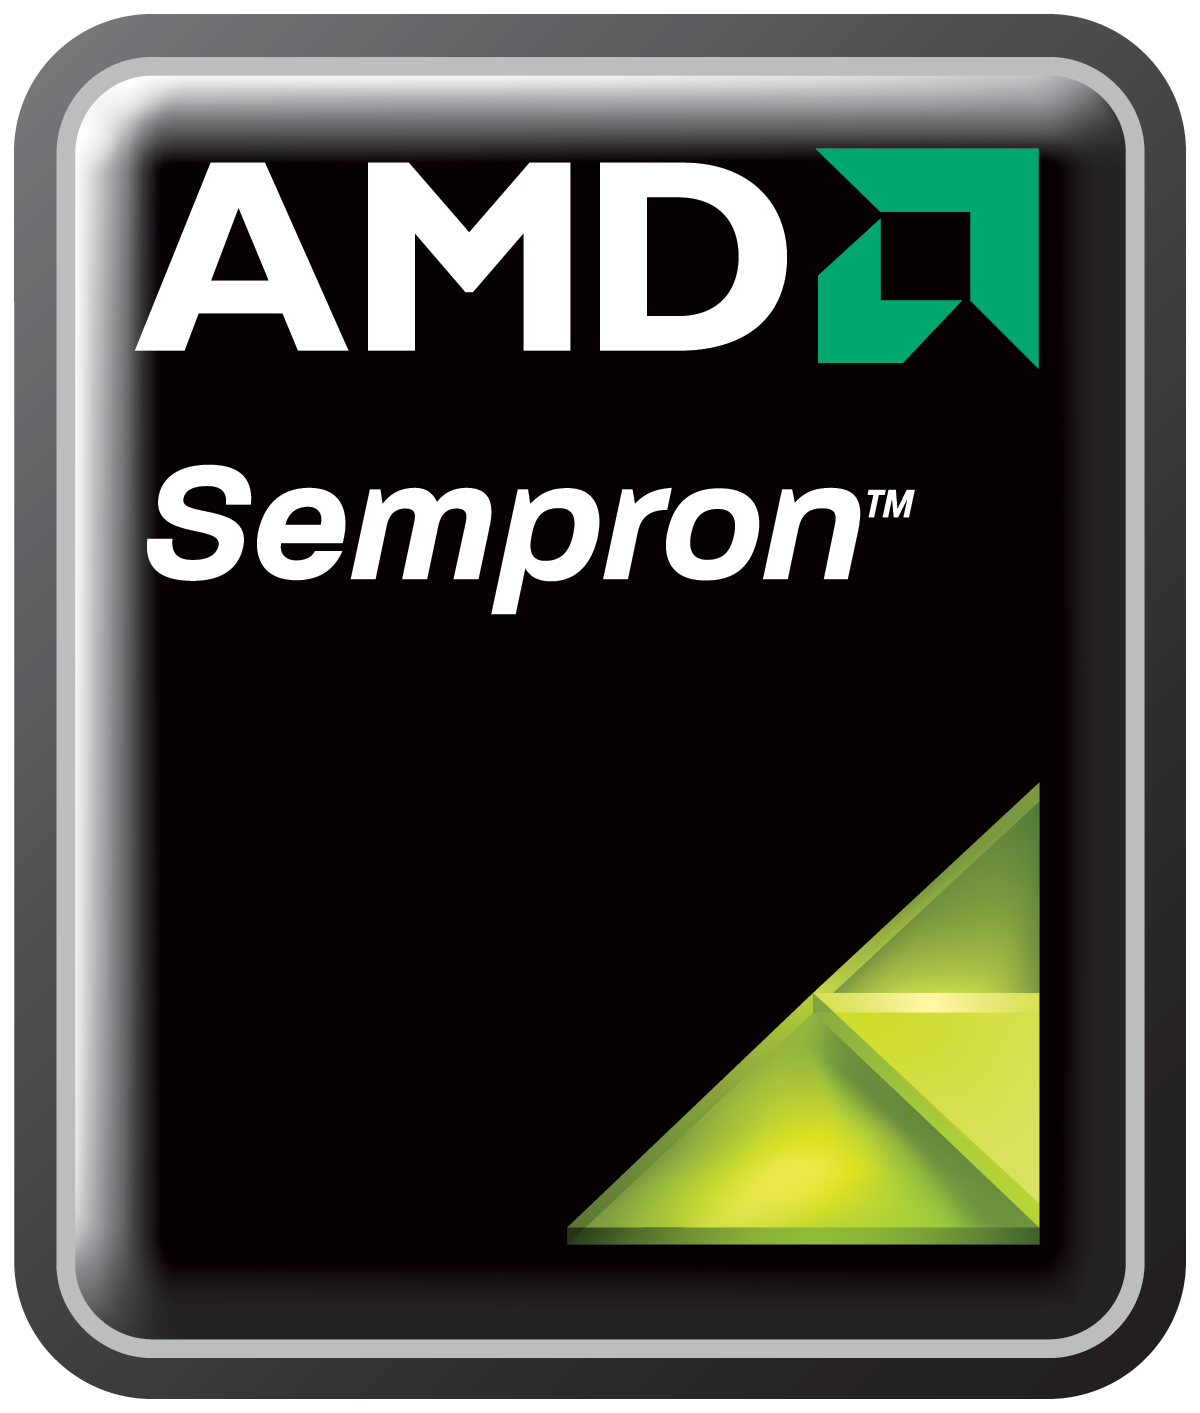 AMD - Sempron logo alt